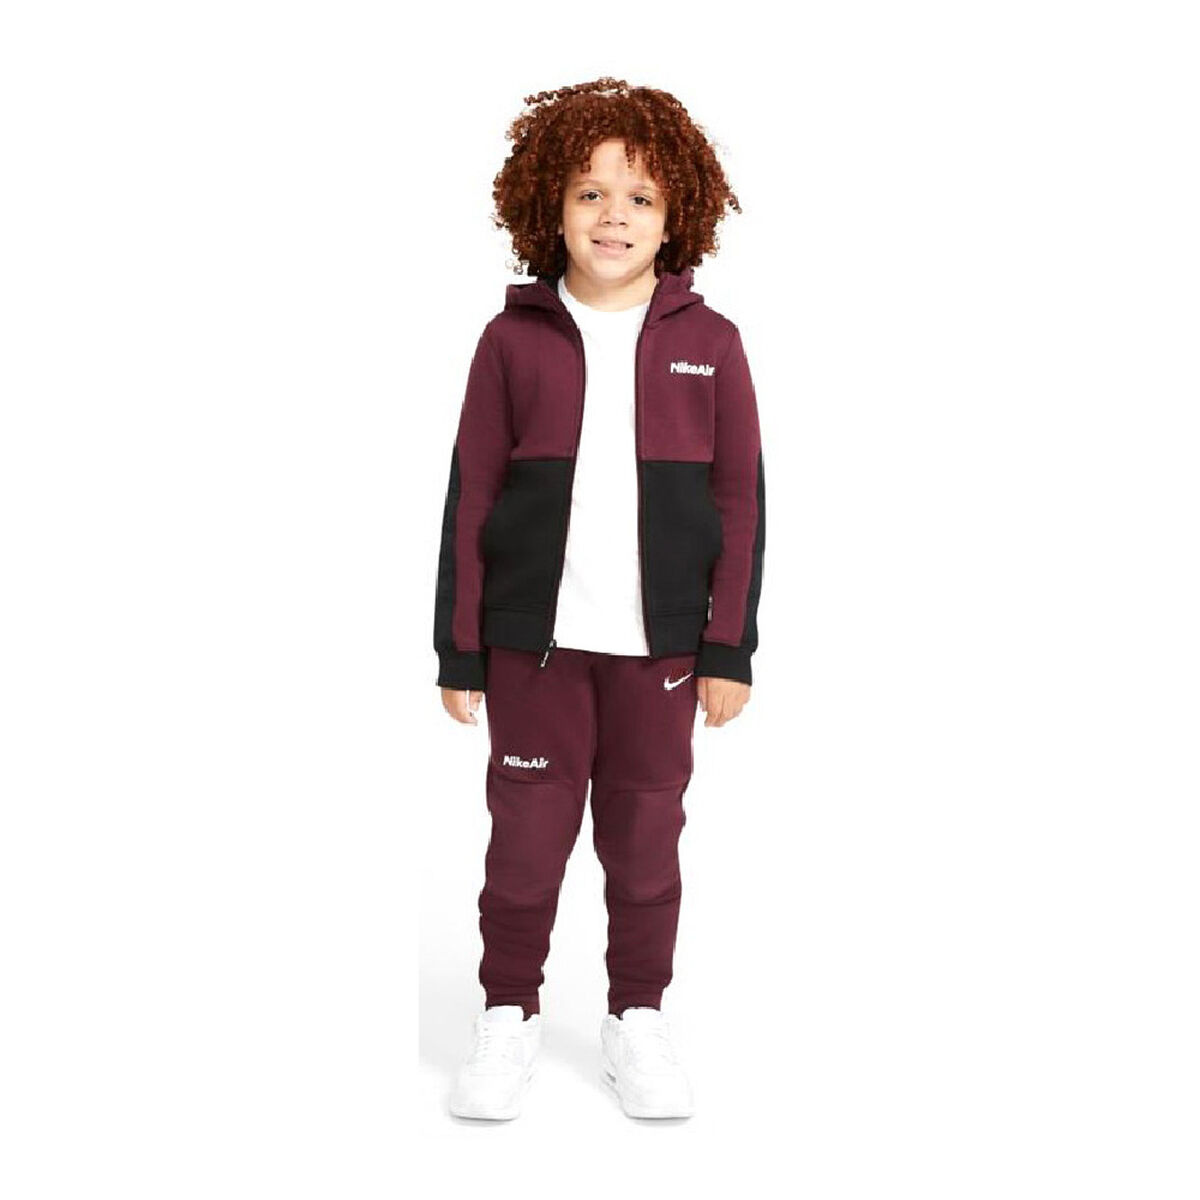 Children's Sports Jacket Nike Air Maroon